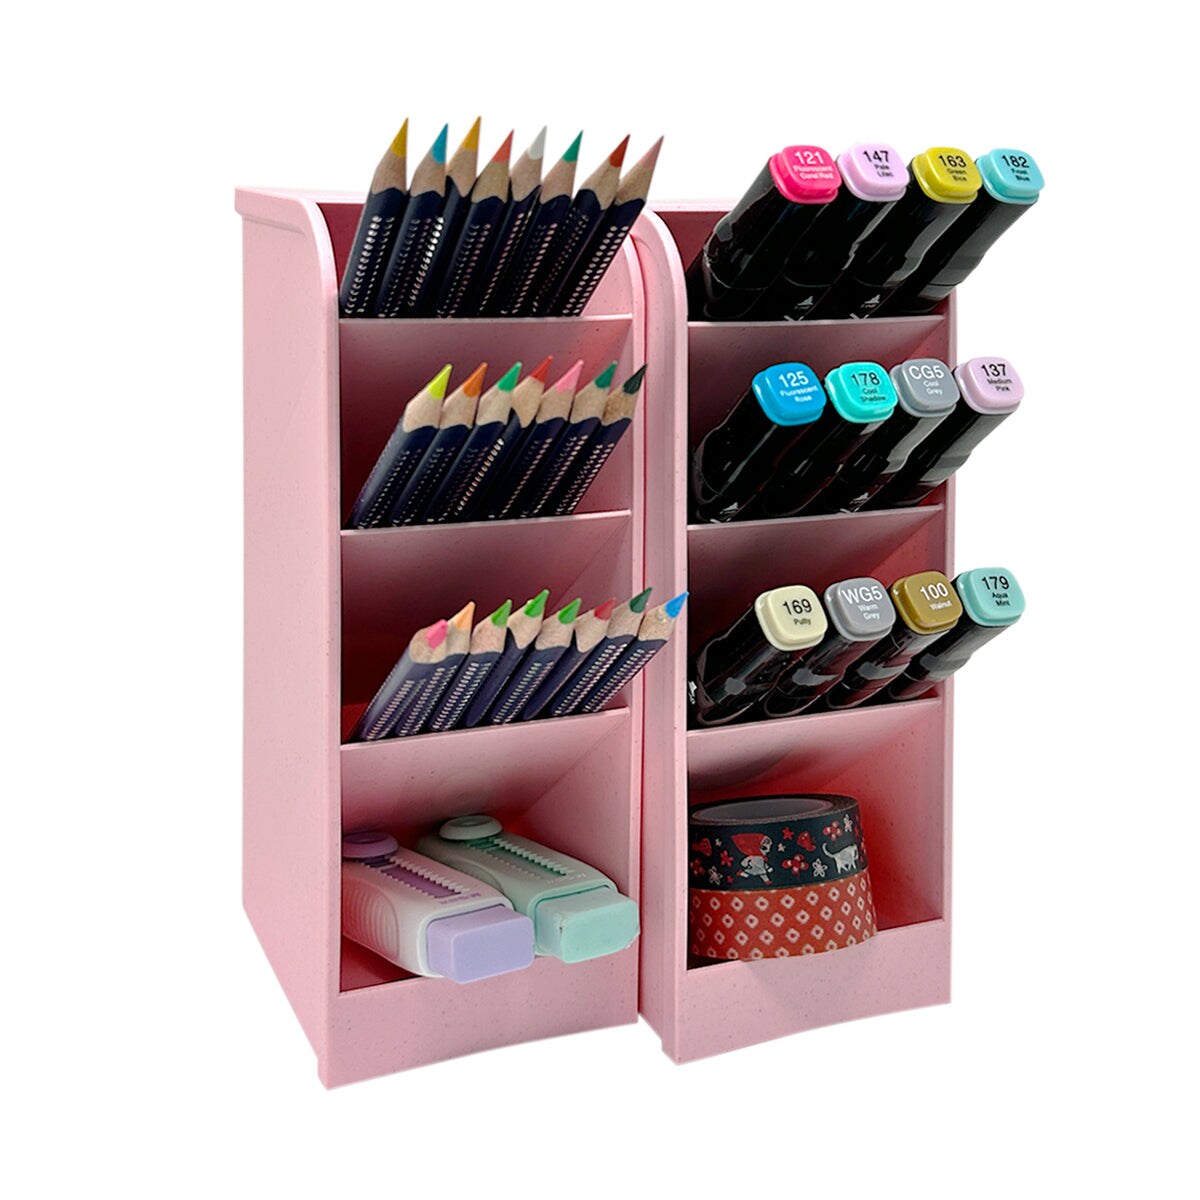 Buy Craft Pen, Pencil & Marker Cases at Best Price online